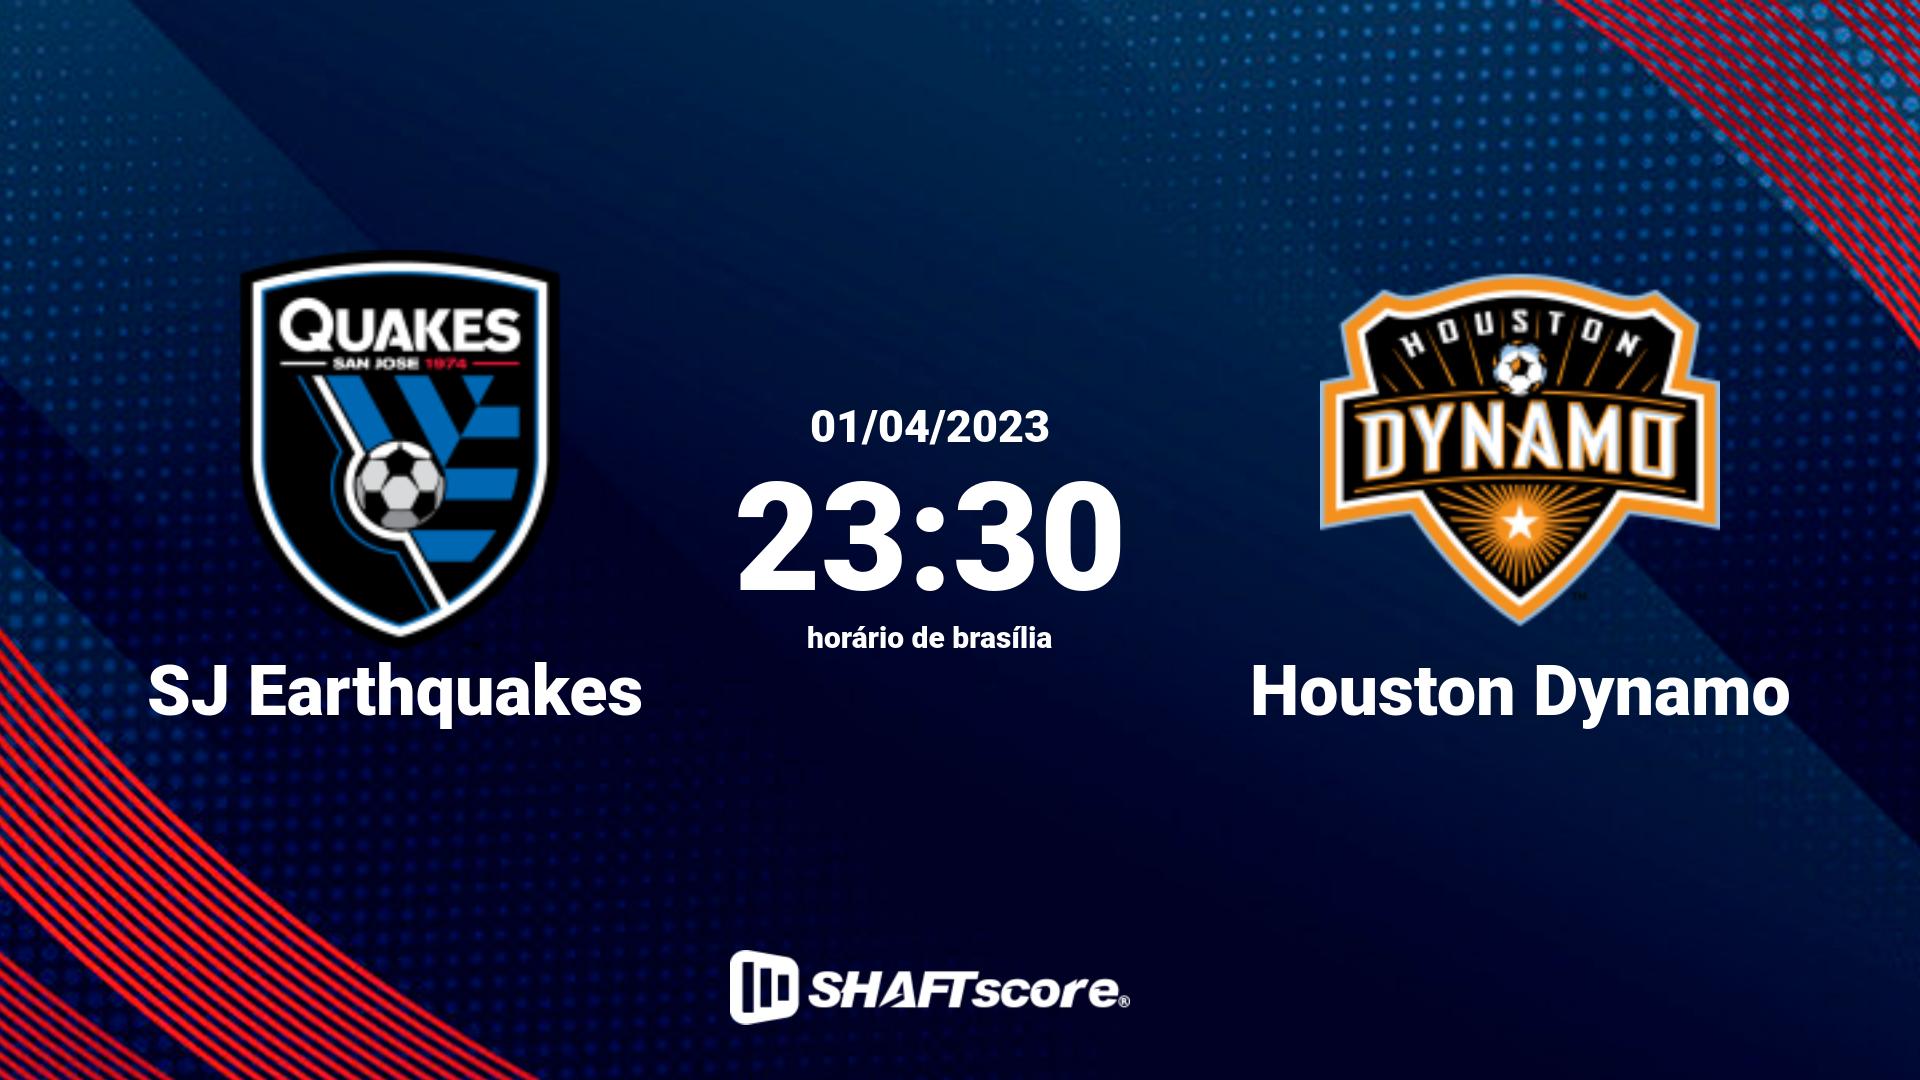 Estatísticas do jogo SJ Earthquakes vs Houston Dynamo 01.04 23:30